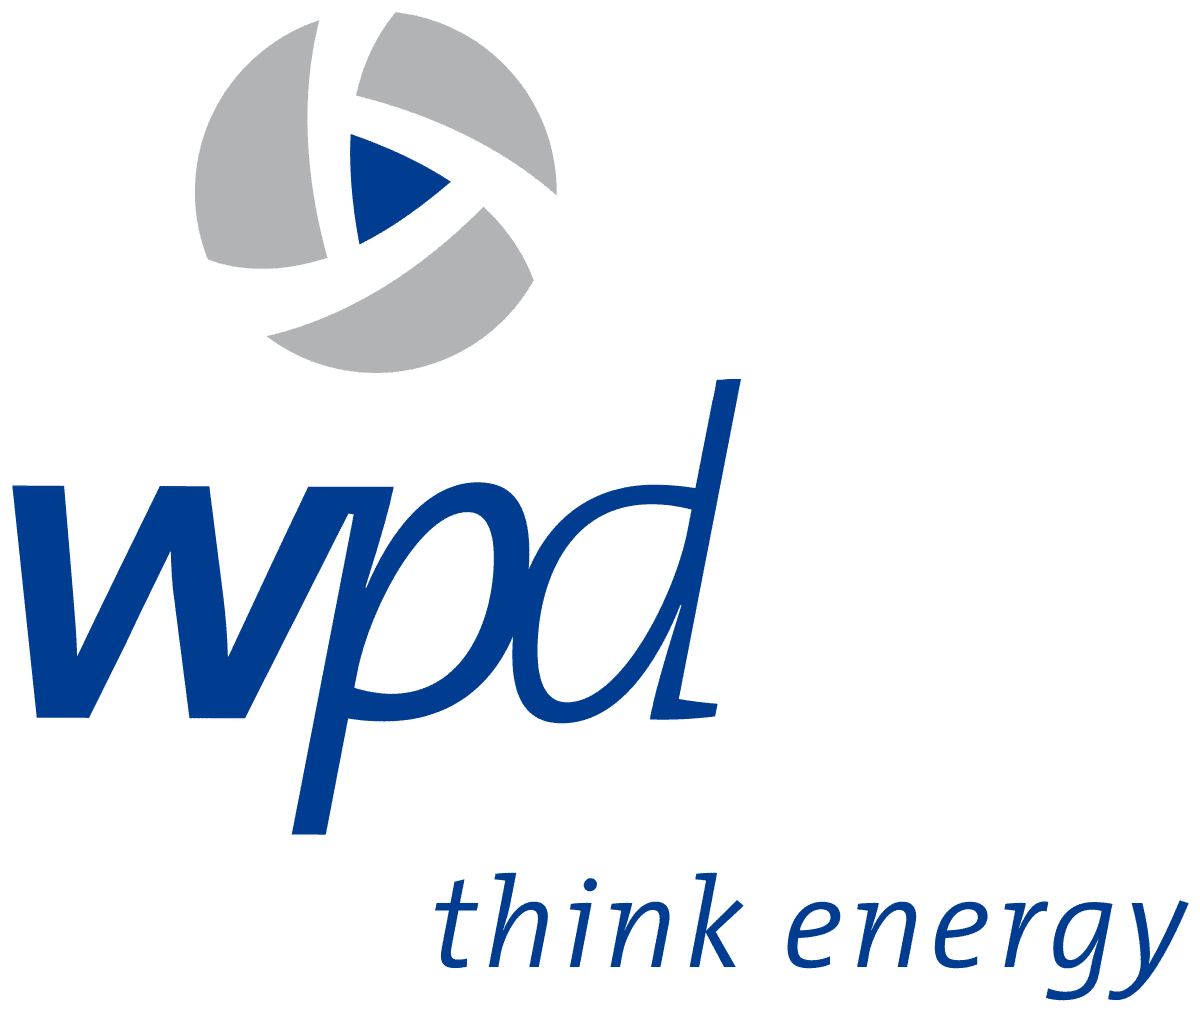 wpd logo